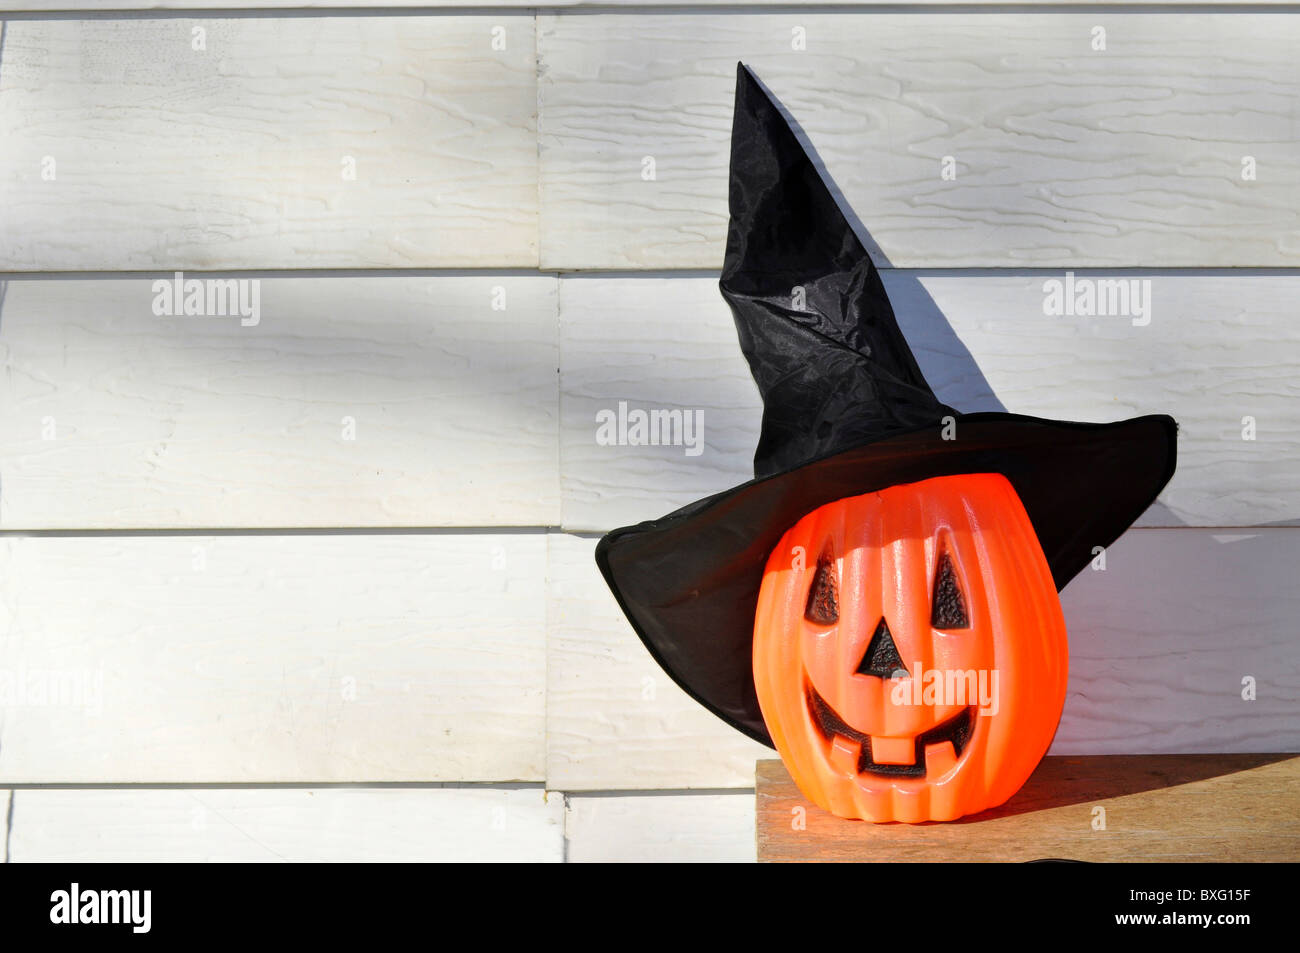 halloween decorations Stock Photo